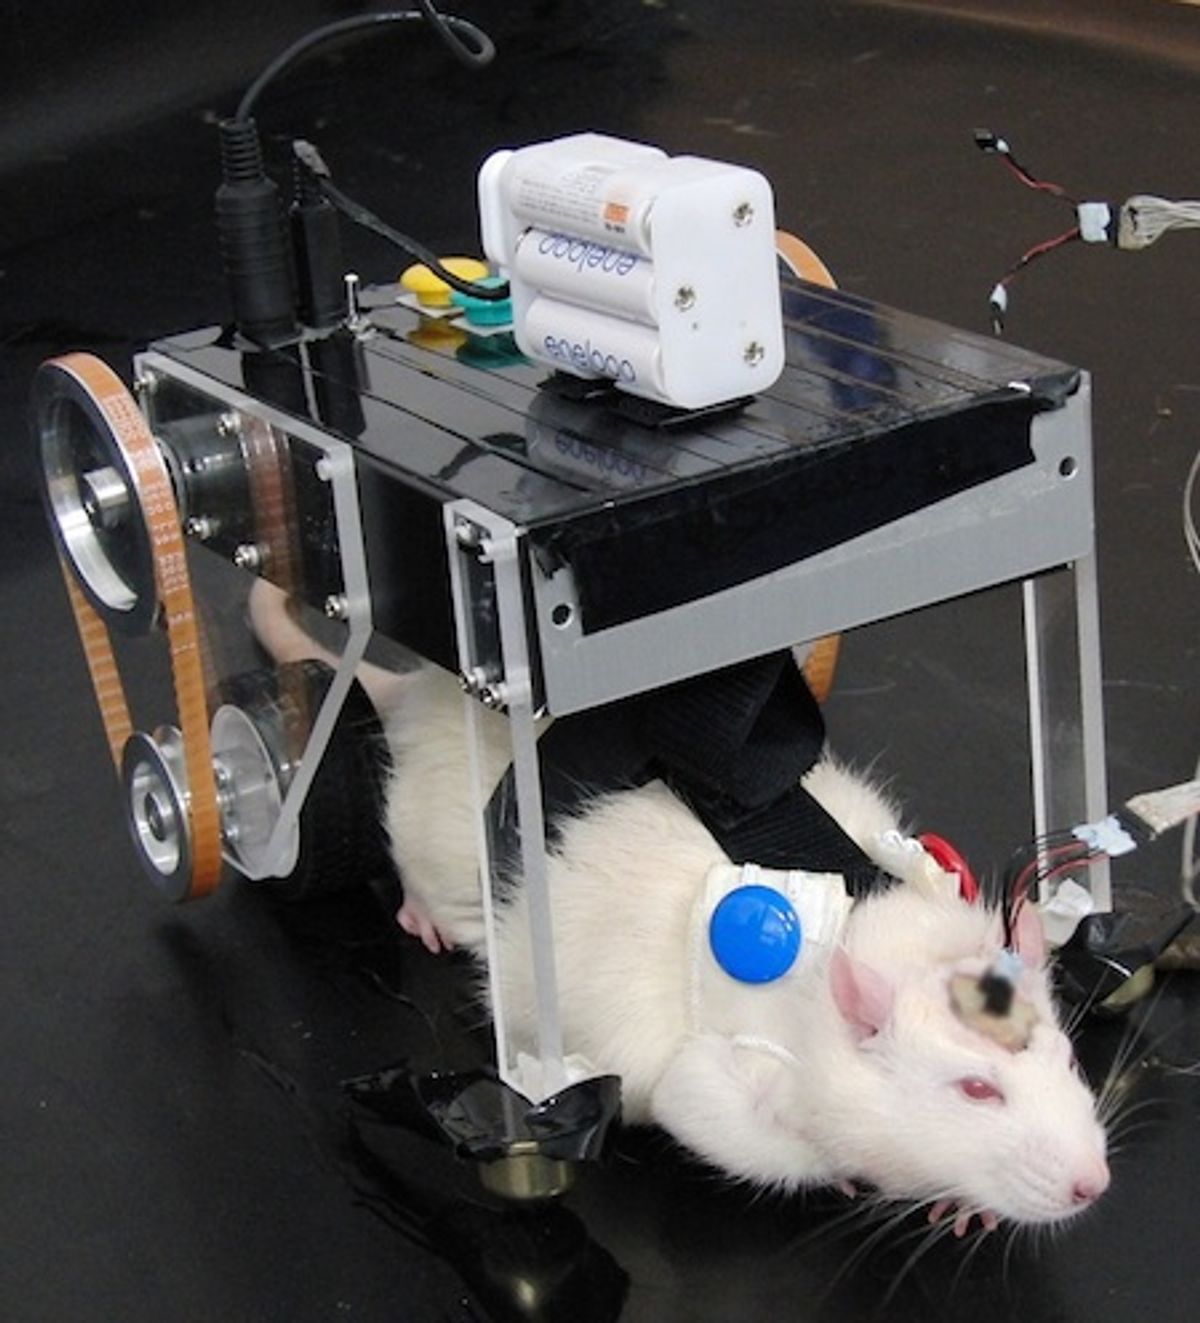 Researchers Using Rat-Robot Hybrid to Design Better Brain Machine Interfaces